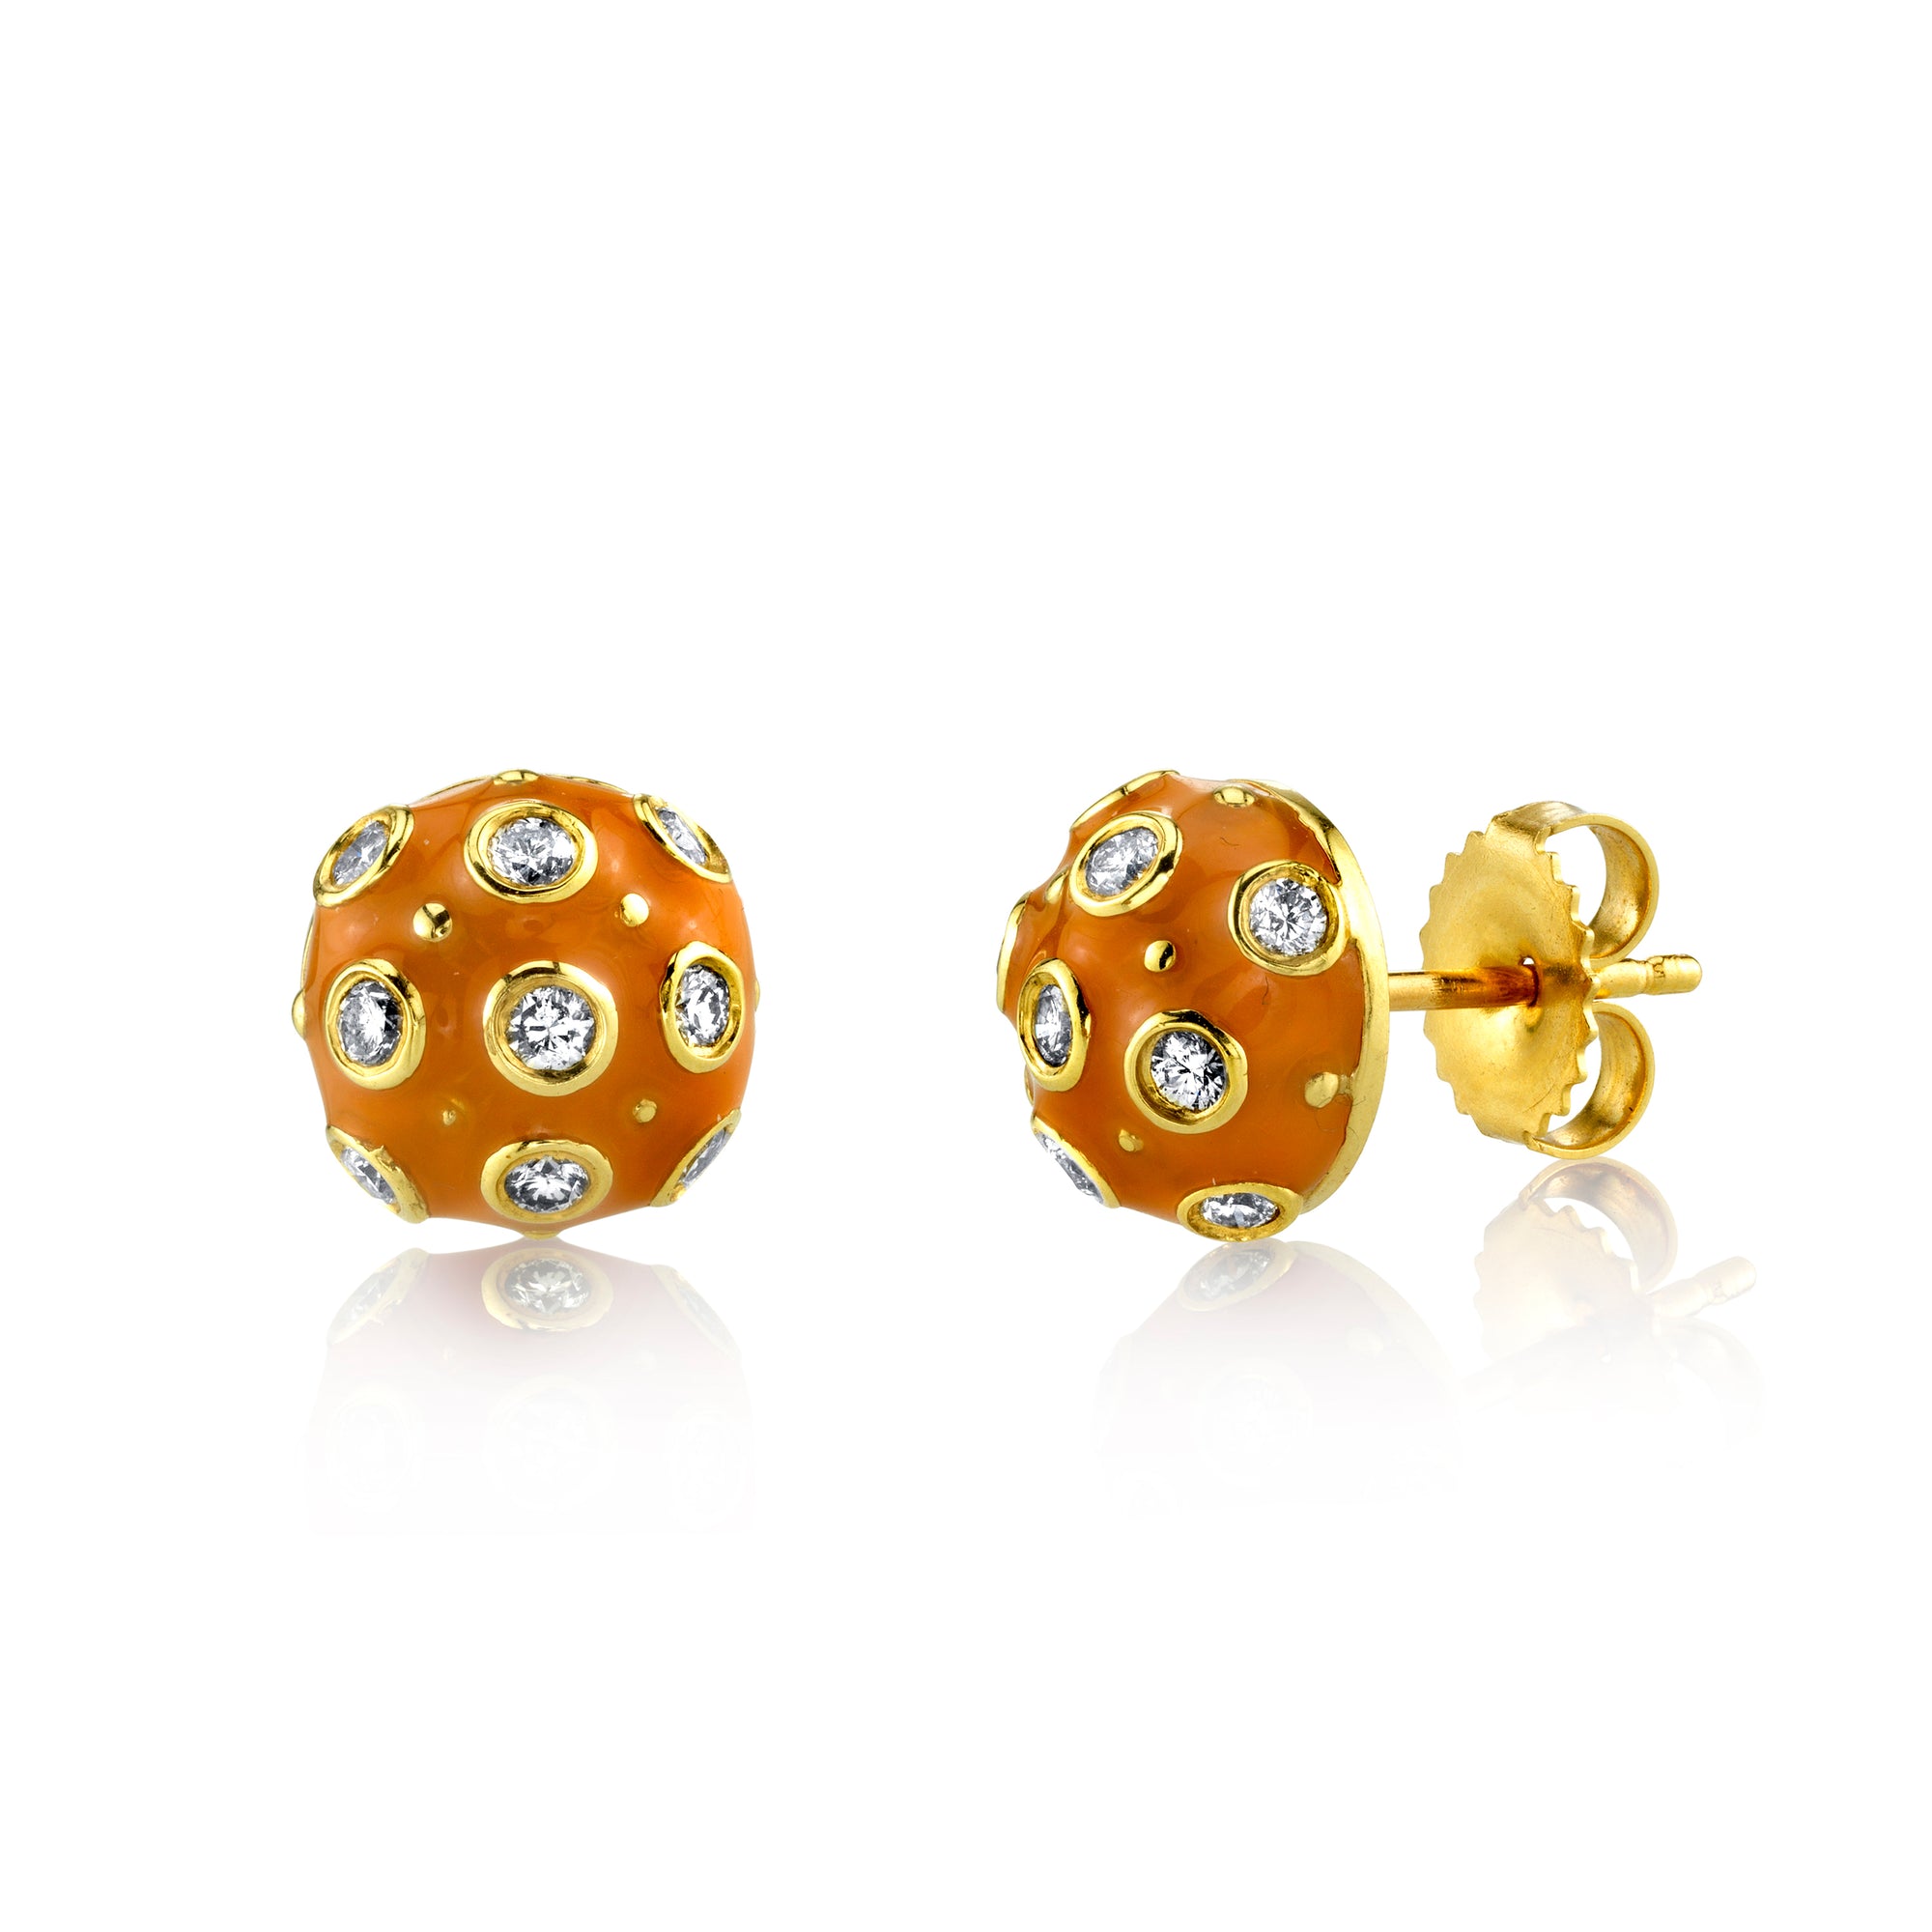 18k Yellow Gold, Orange Enamel and Diamond Stud Earrings by Lord Jewelry - Talisman Collection Fine Jewelers